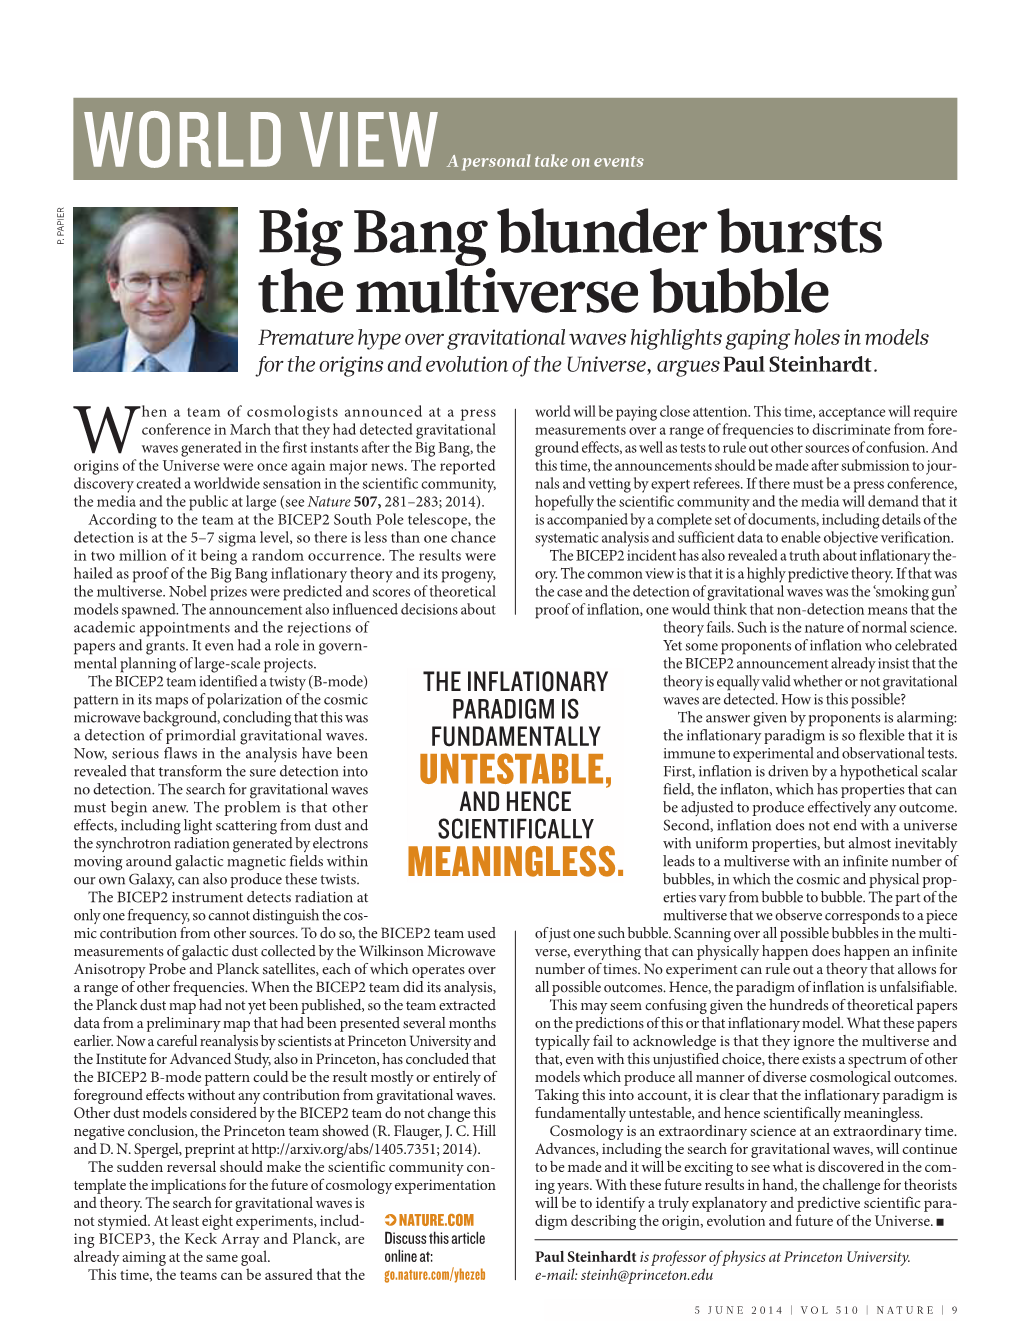 Big Bang Blunder Bursts the Multiverse Bubble